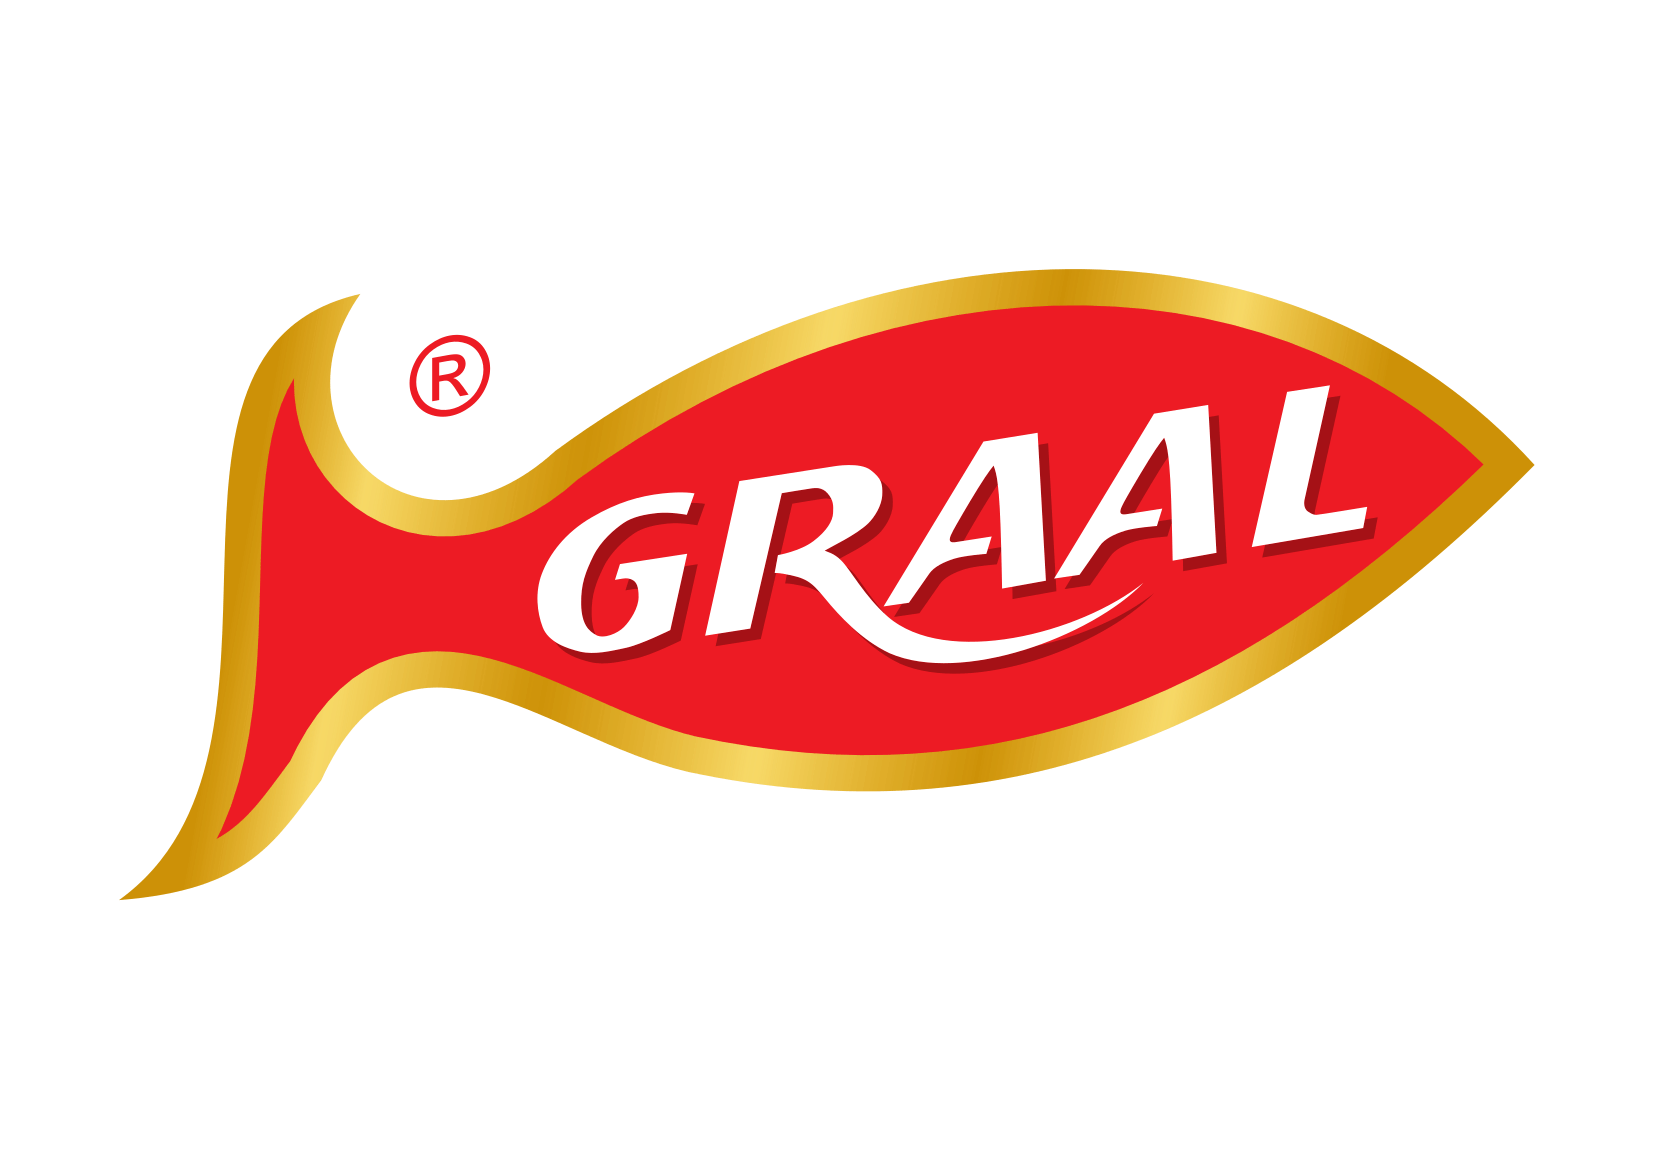 GRALL